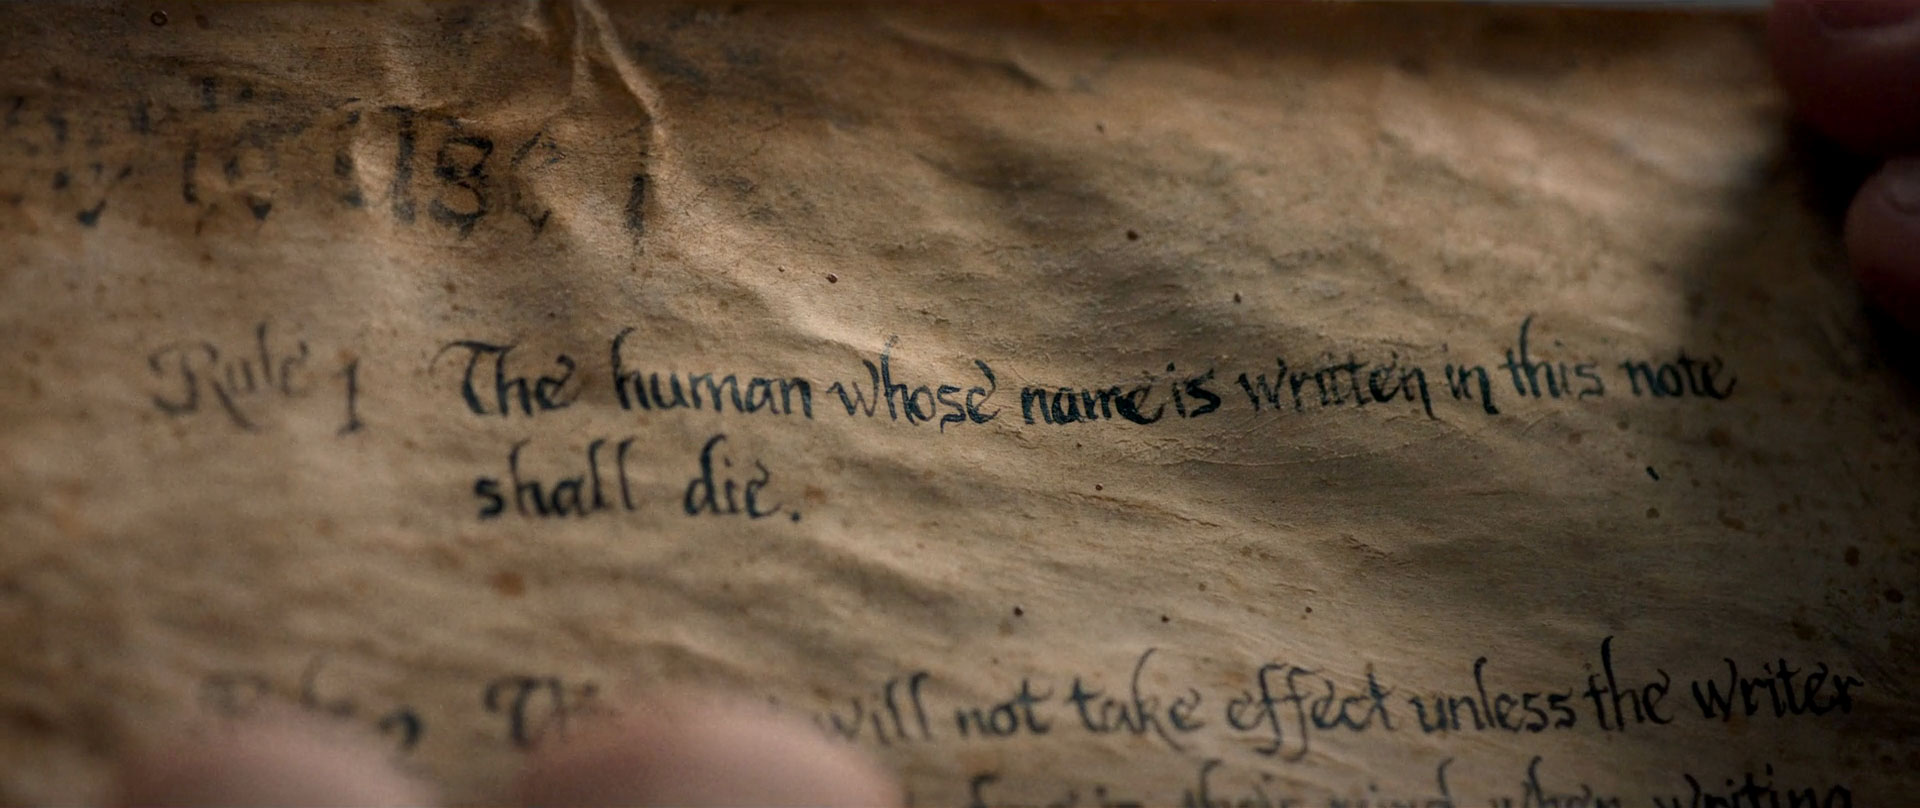 hand written death note rules